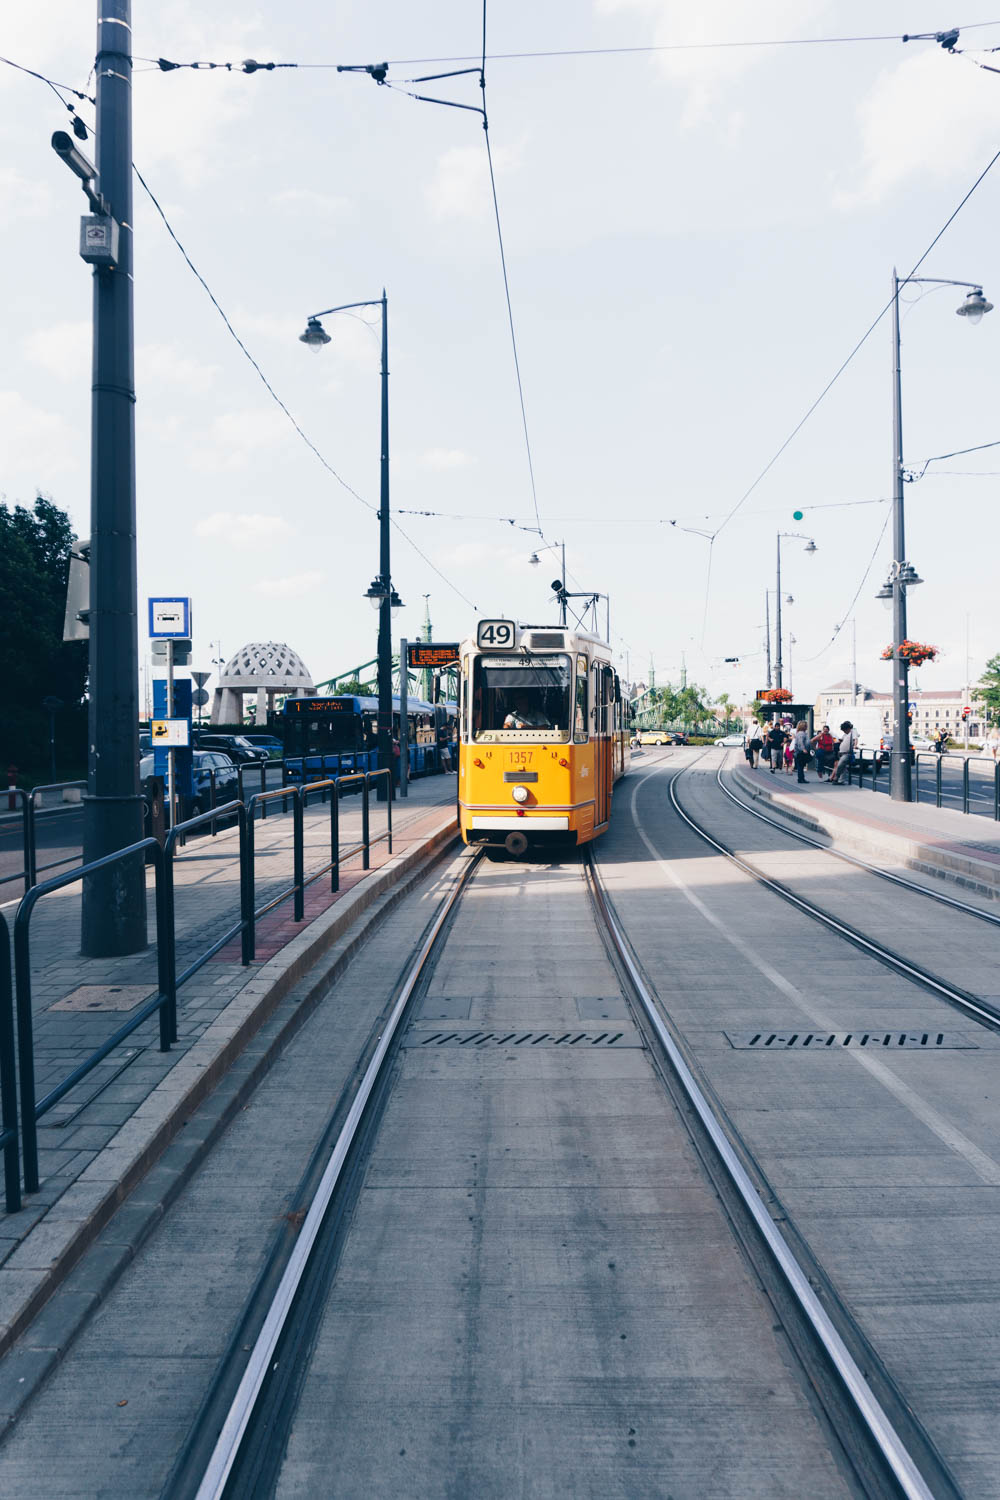 Budapest Hungary / Travel Guide / Yellow Tram / RG Daily Blog /